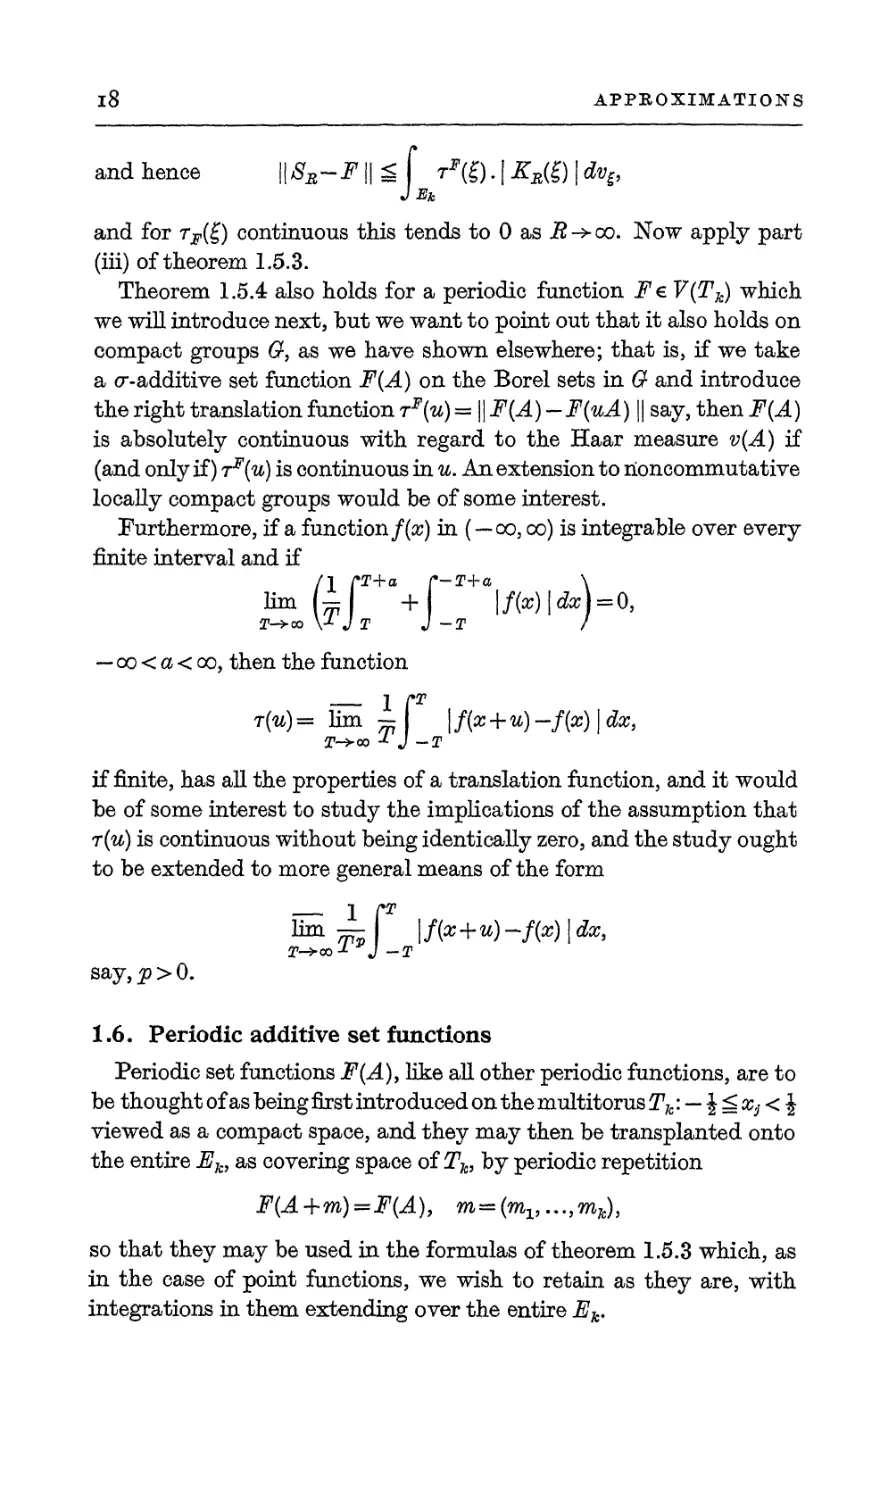 1.6. Periodic additive set functions